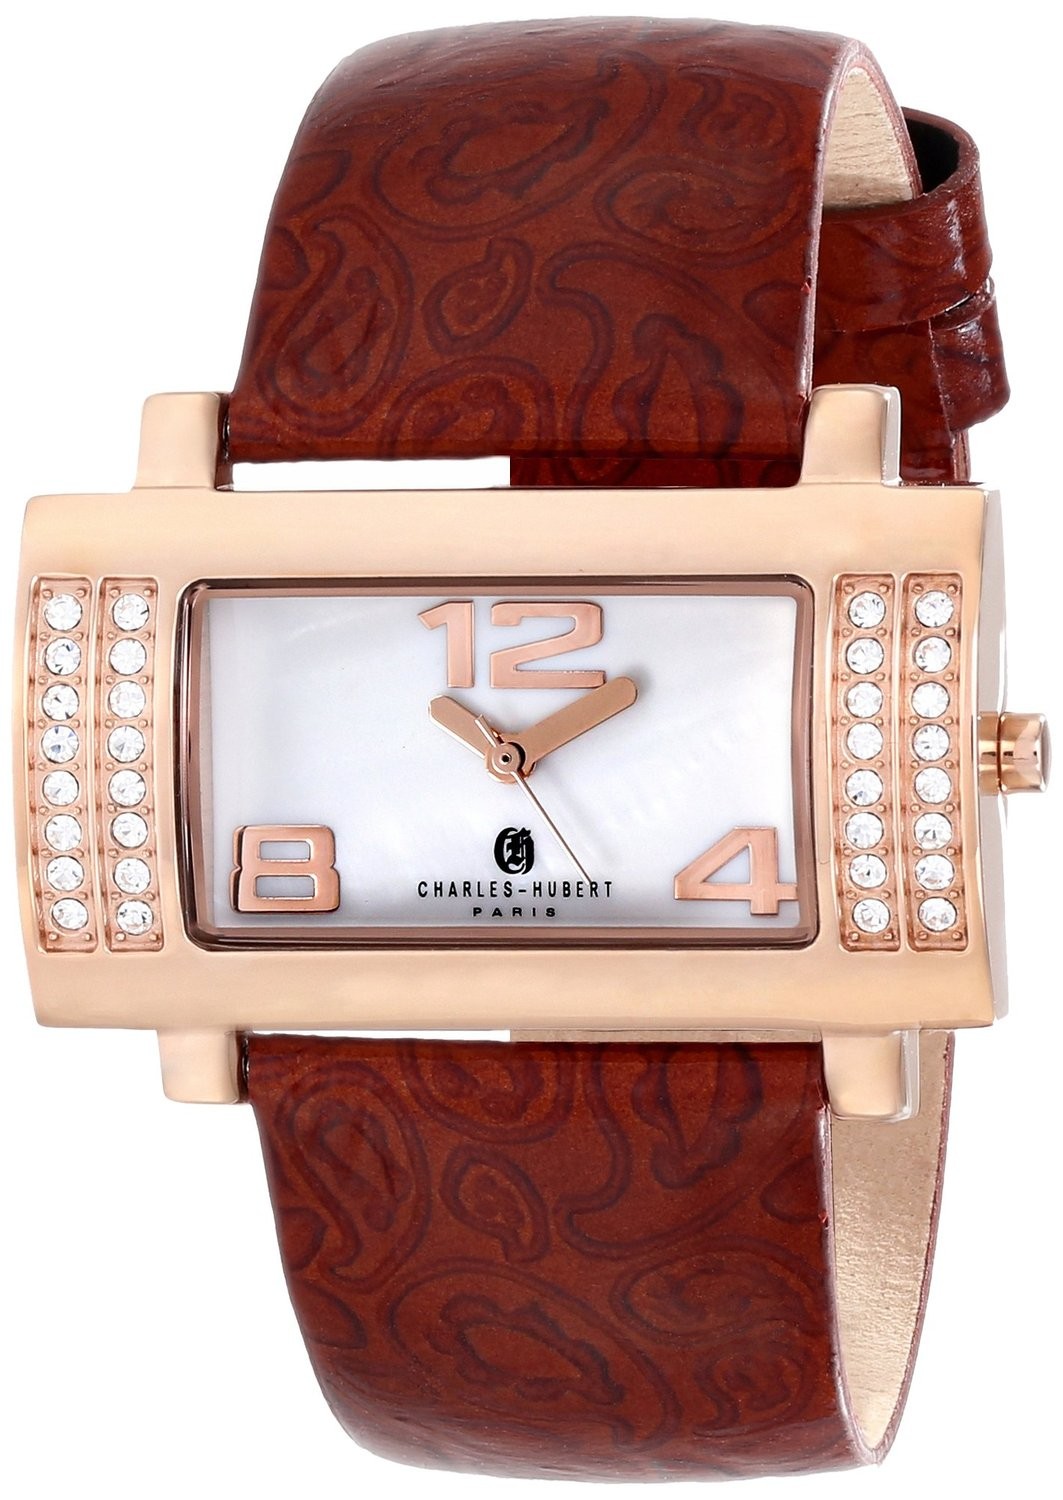 Charles-Hubert Paris Women's Rose-Gold Plated Stainless Steel Quartz Watch